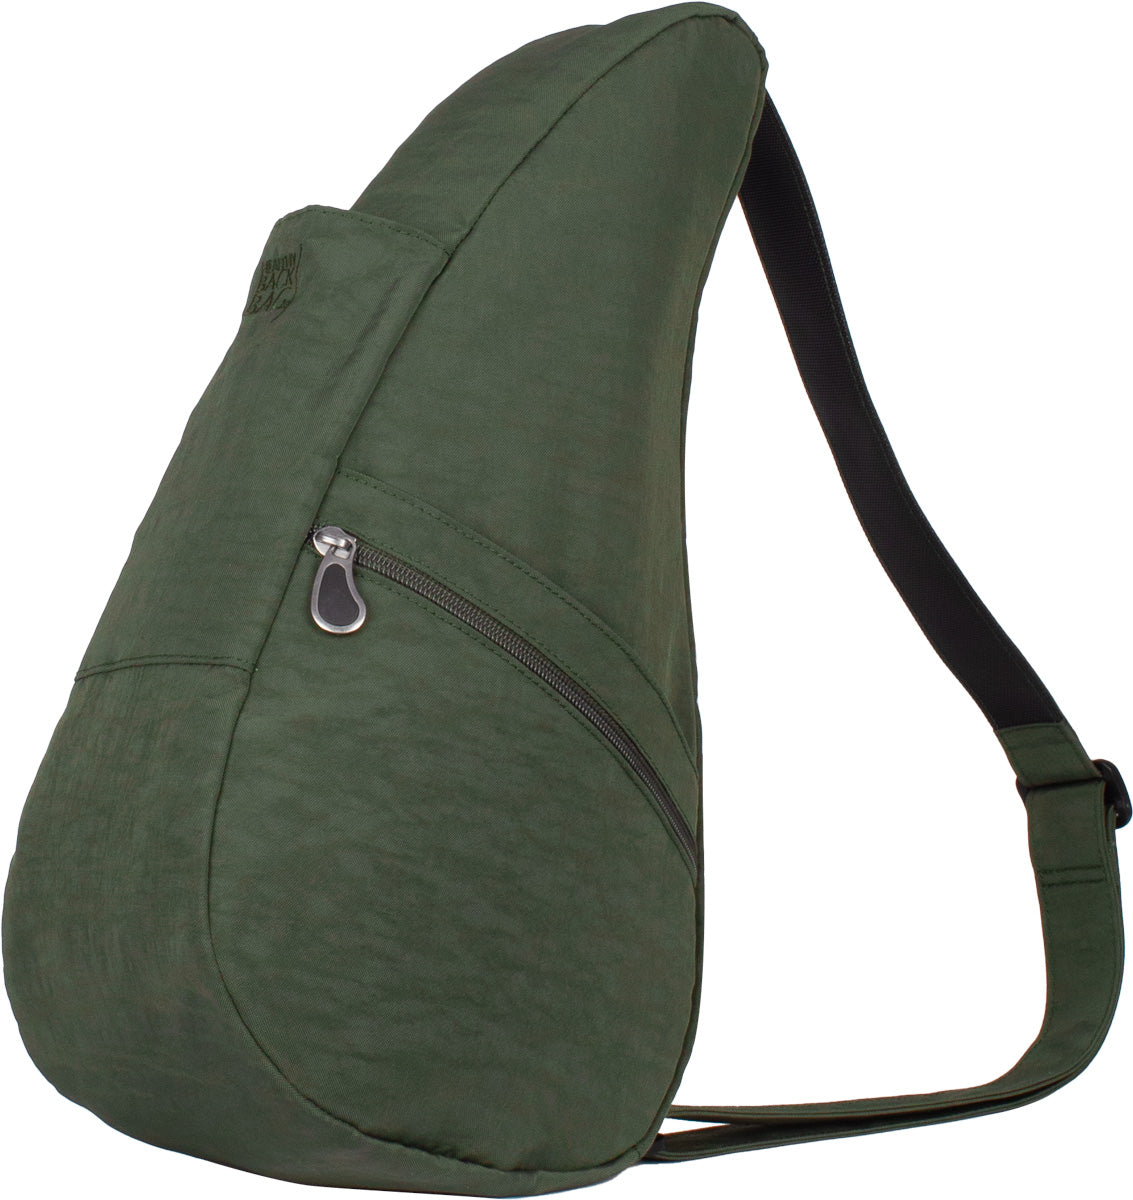 Ameribag Healthy Back Bag Tote Distressed Nylon Small Color: Jungle Green